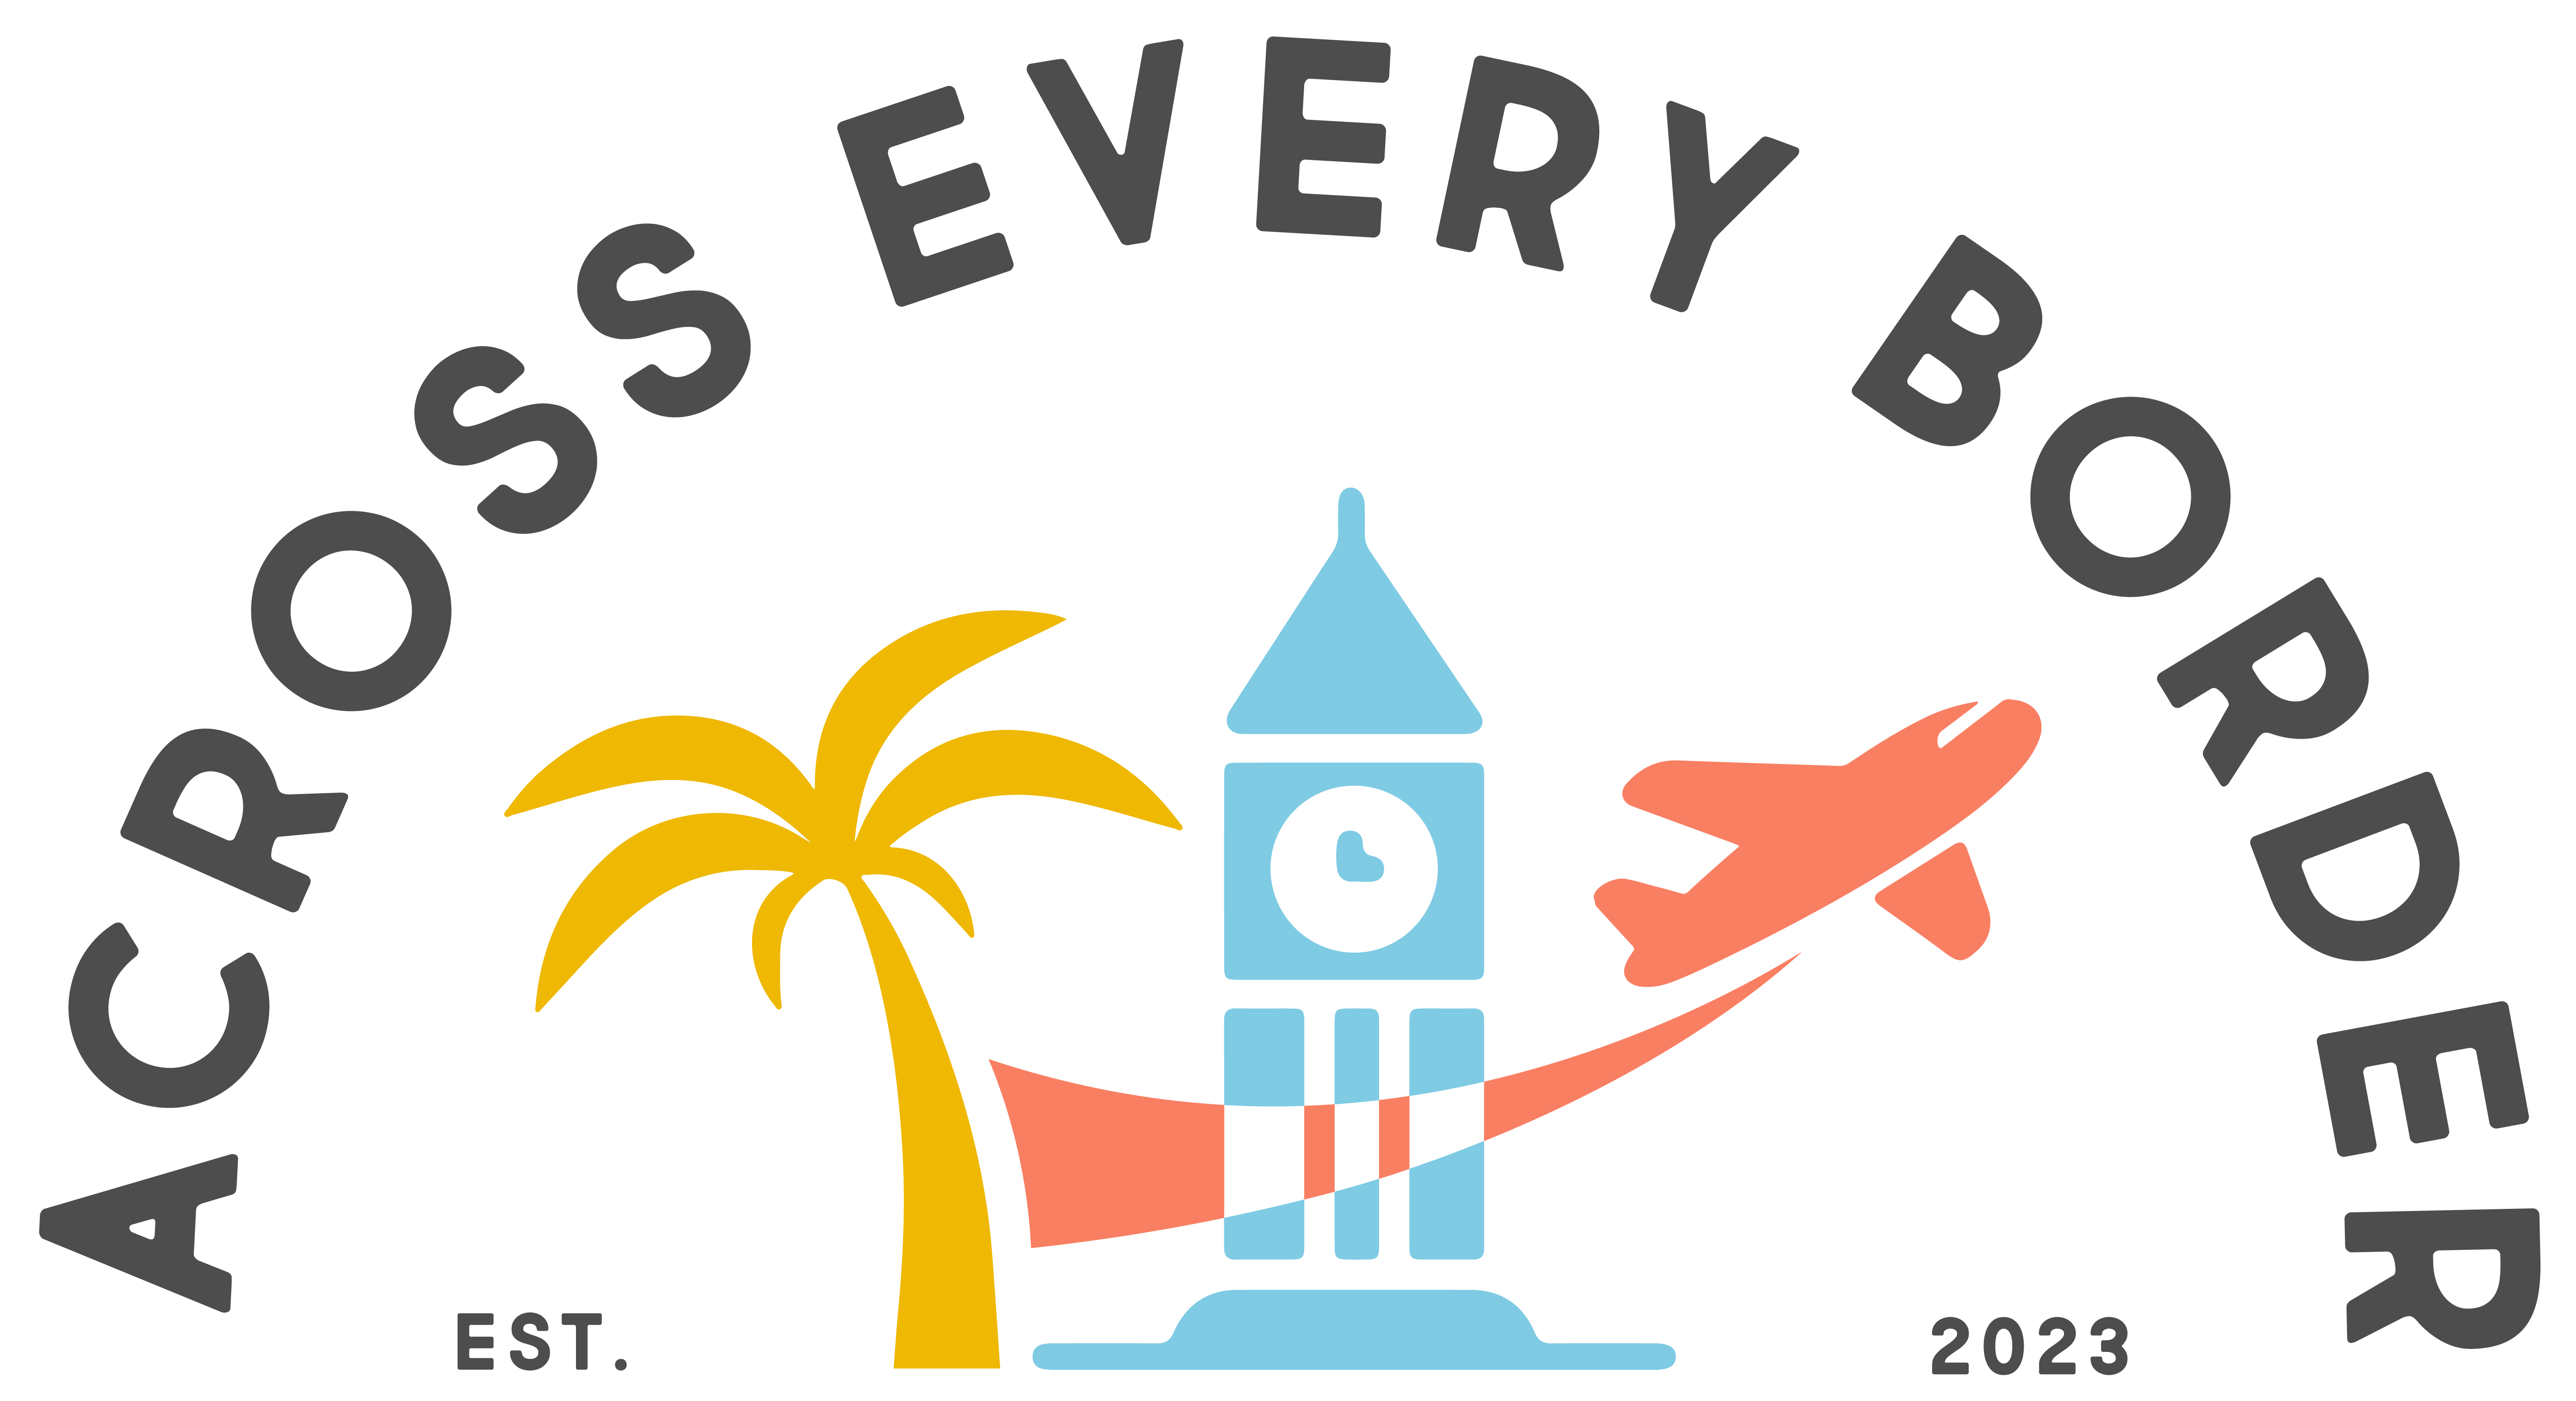 Across Every Border travel blog logo